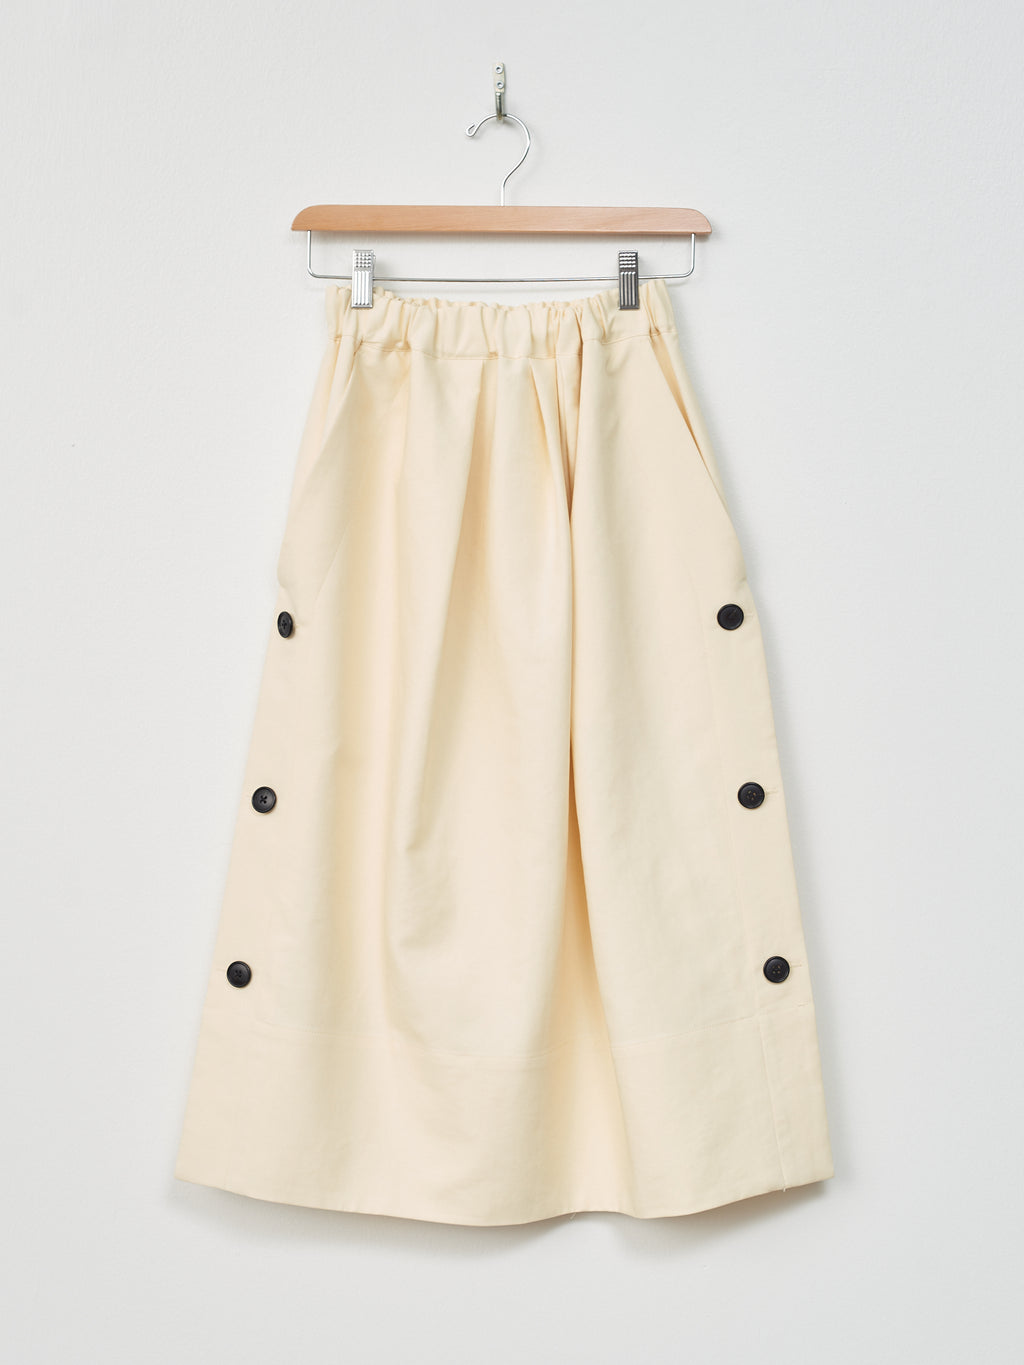 Namu Shop - Nicholson & Nicholson SHIP Skirt - Yellow